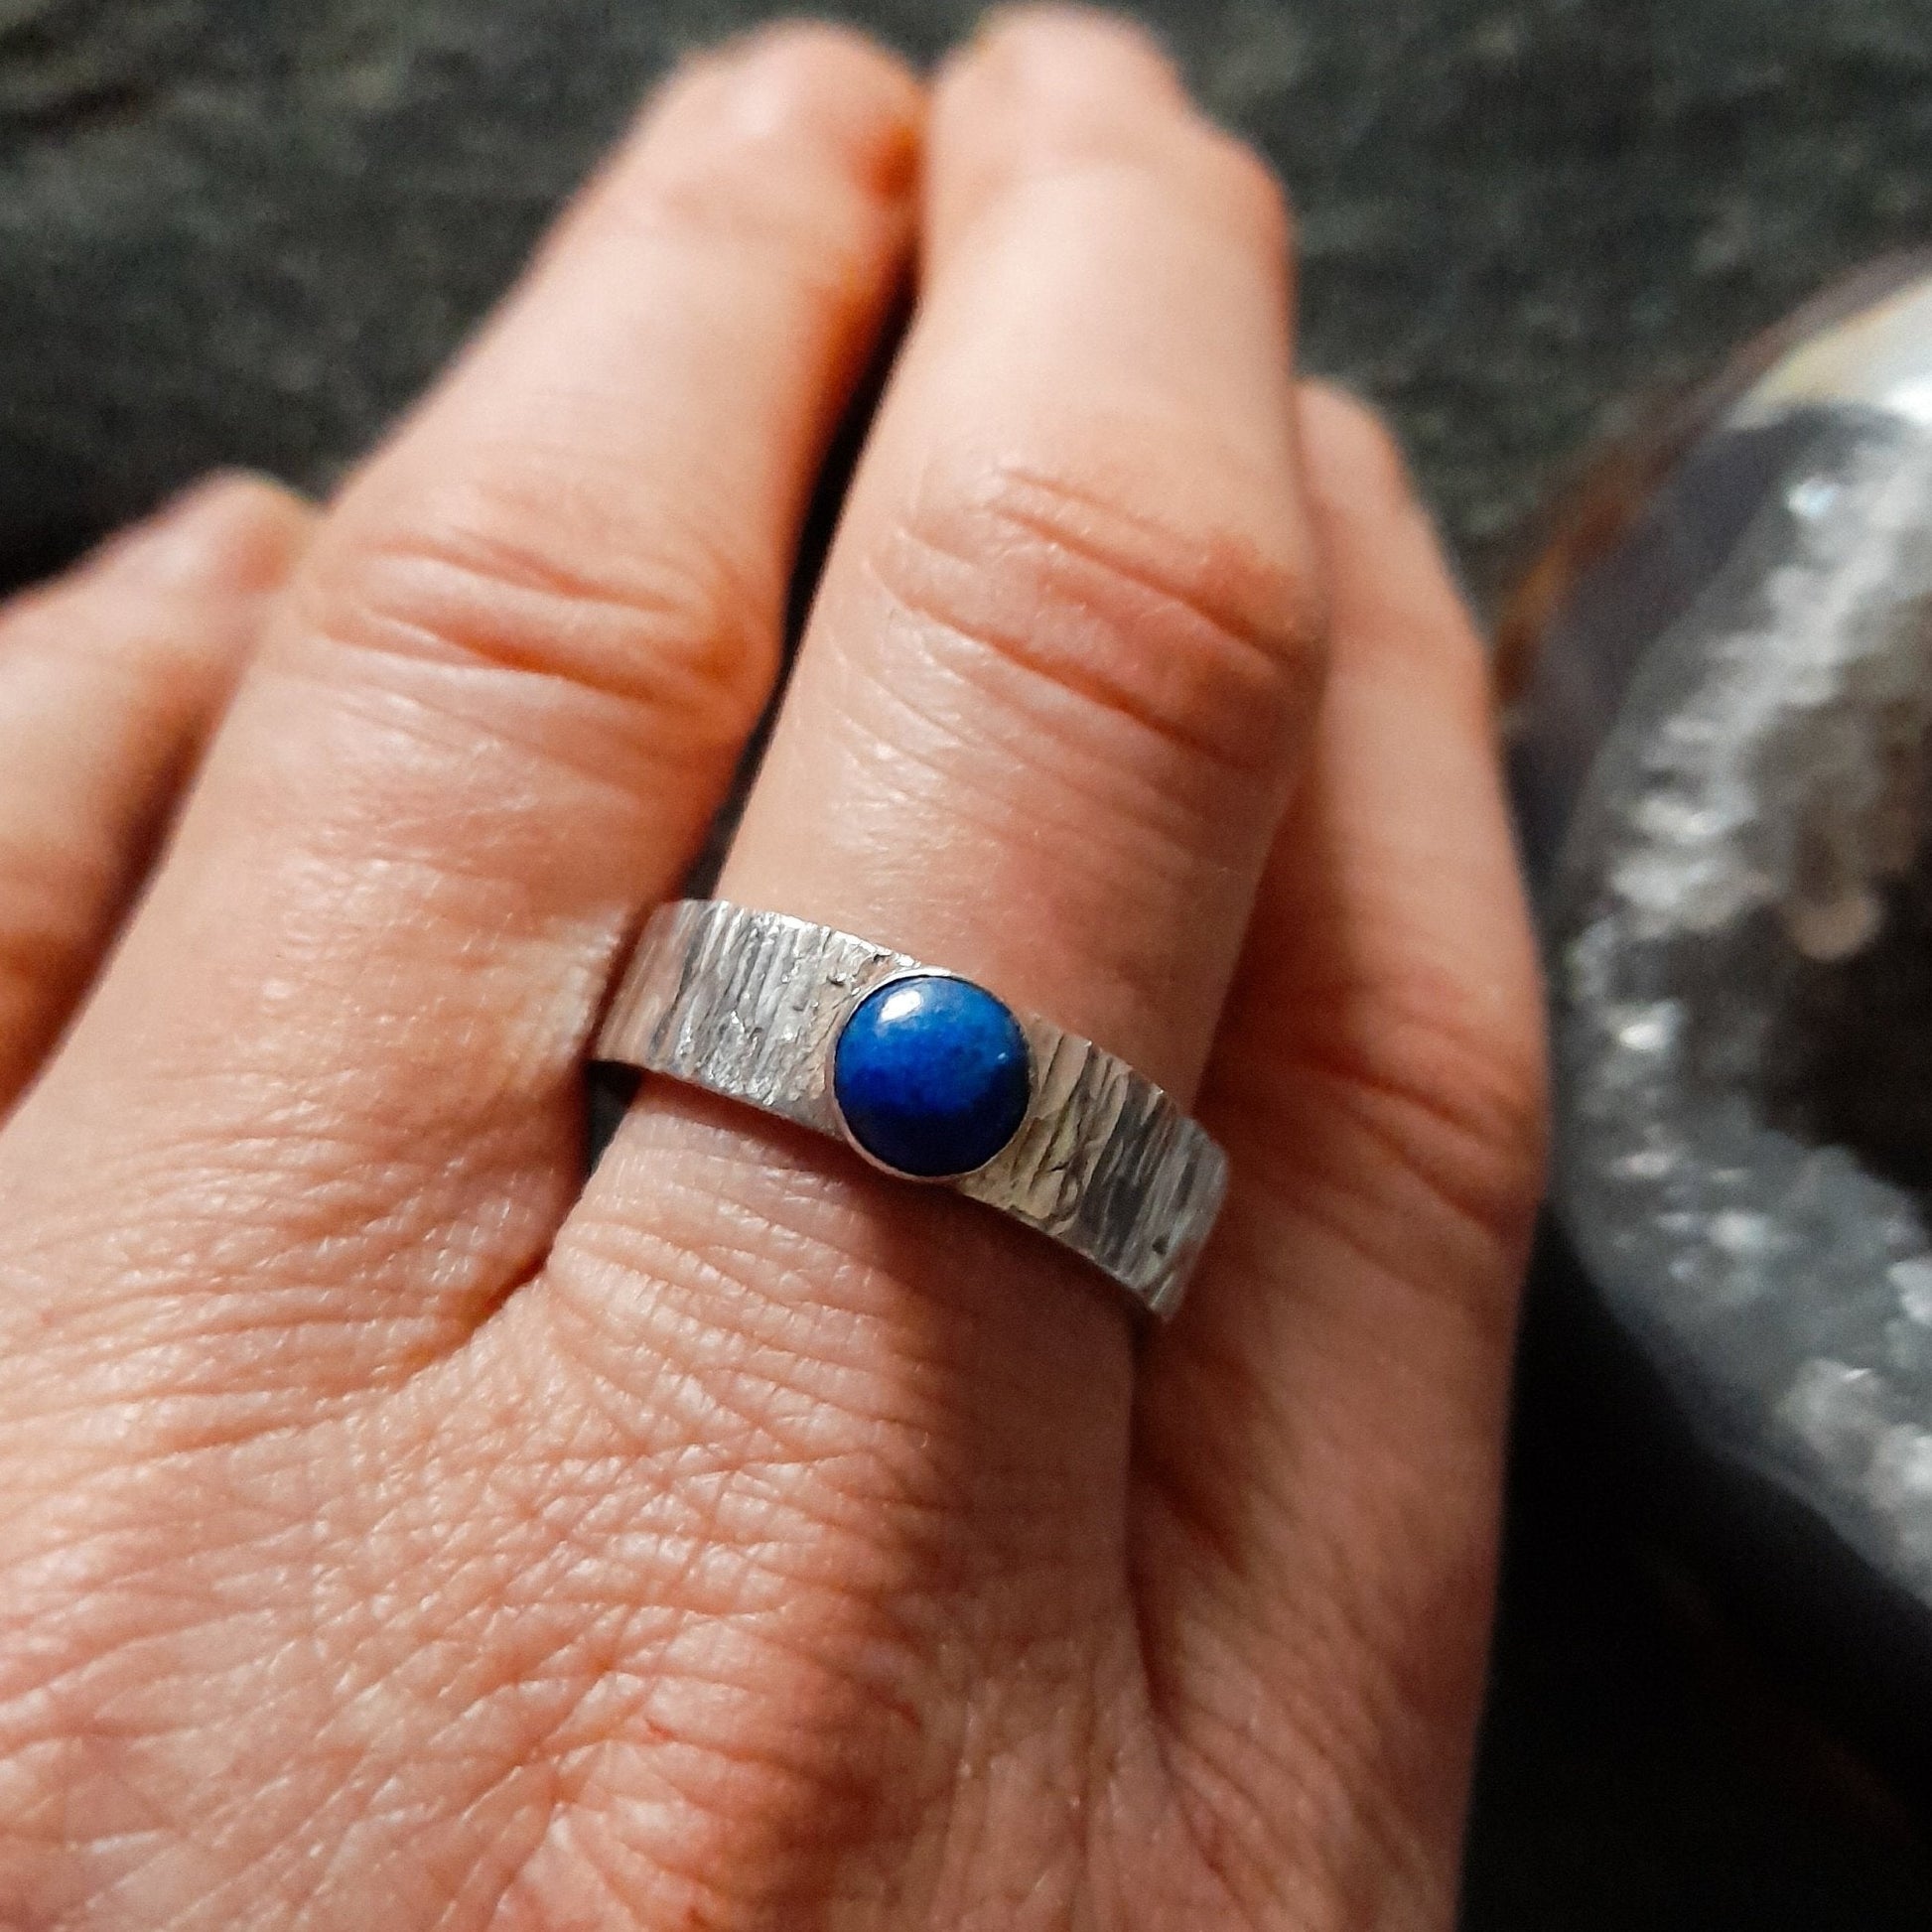 Lapis Lazuli Sterling Silver Ring - Size T - Arborvitae Designs